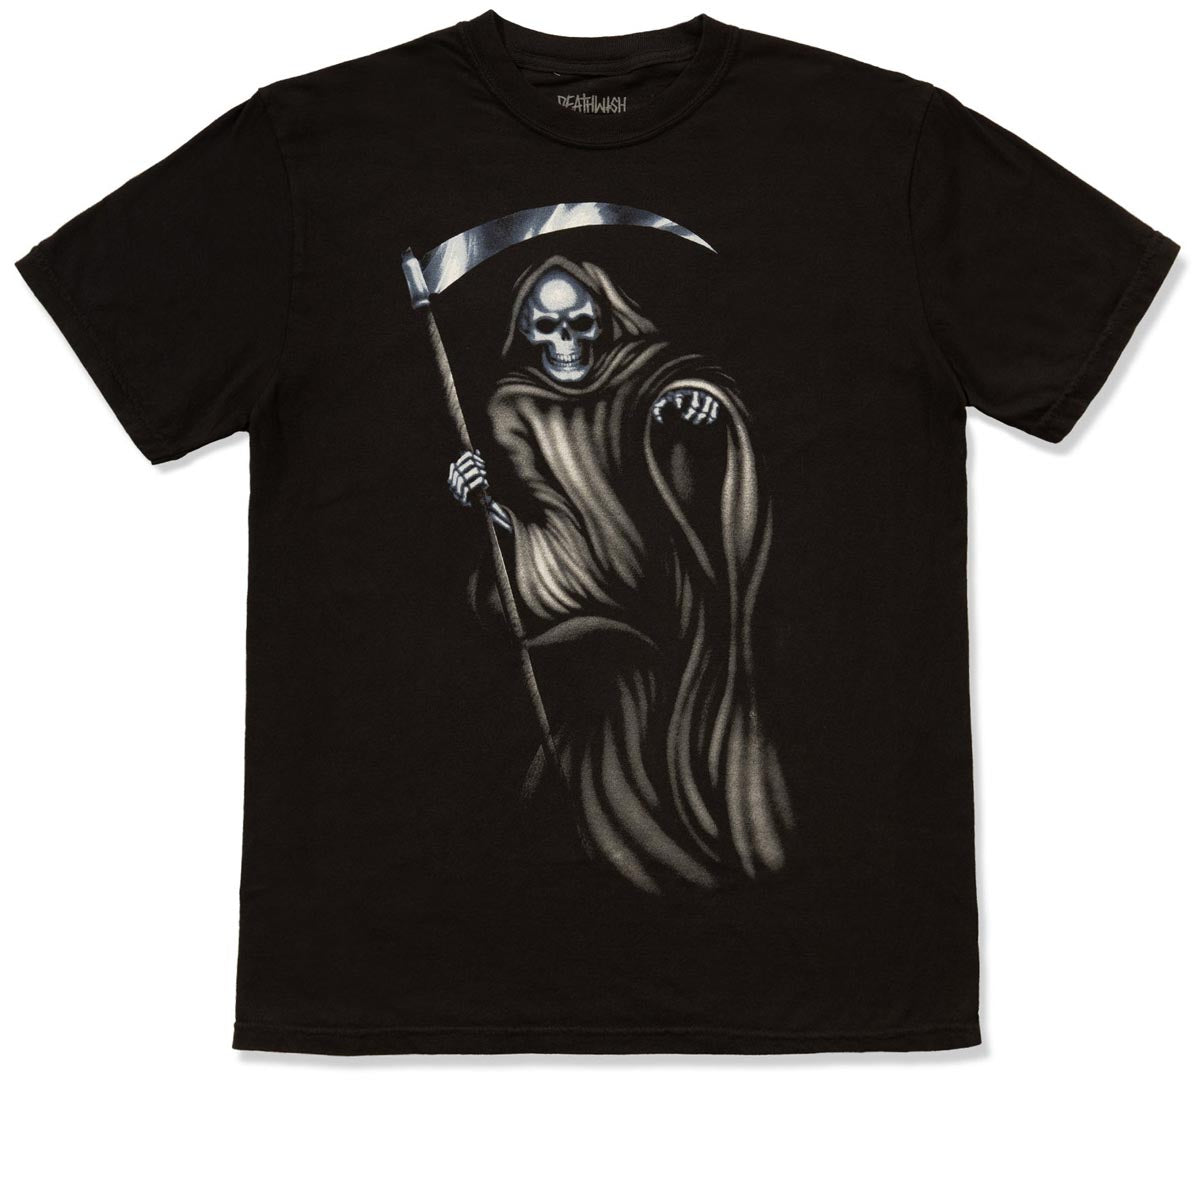 Deathwish Lose Your Soul T-Shirt - Black image 1